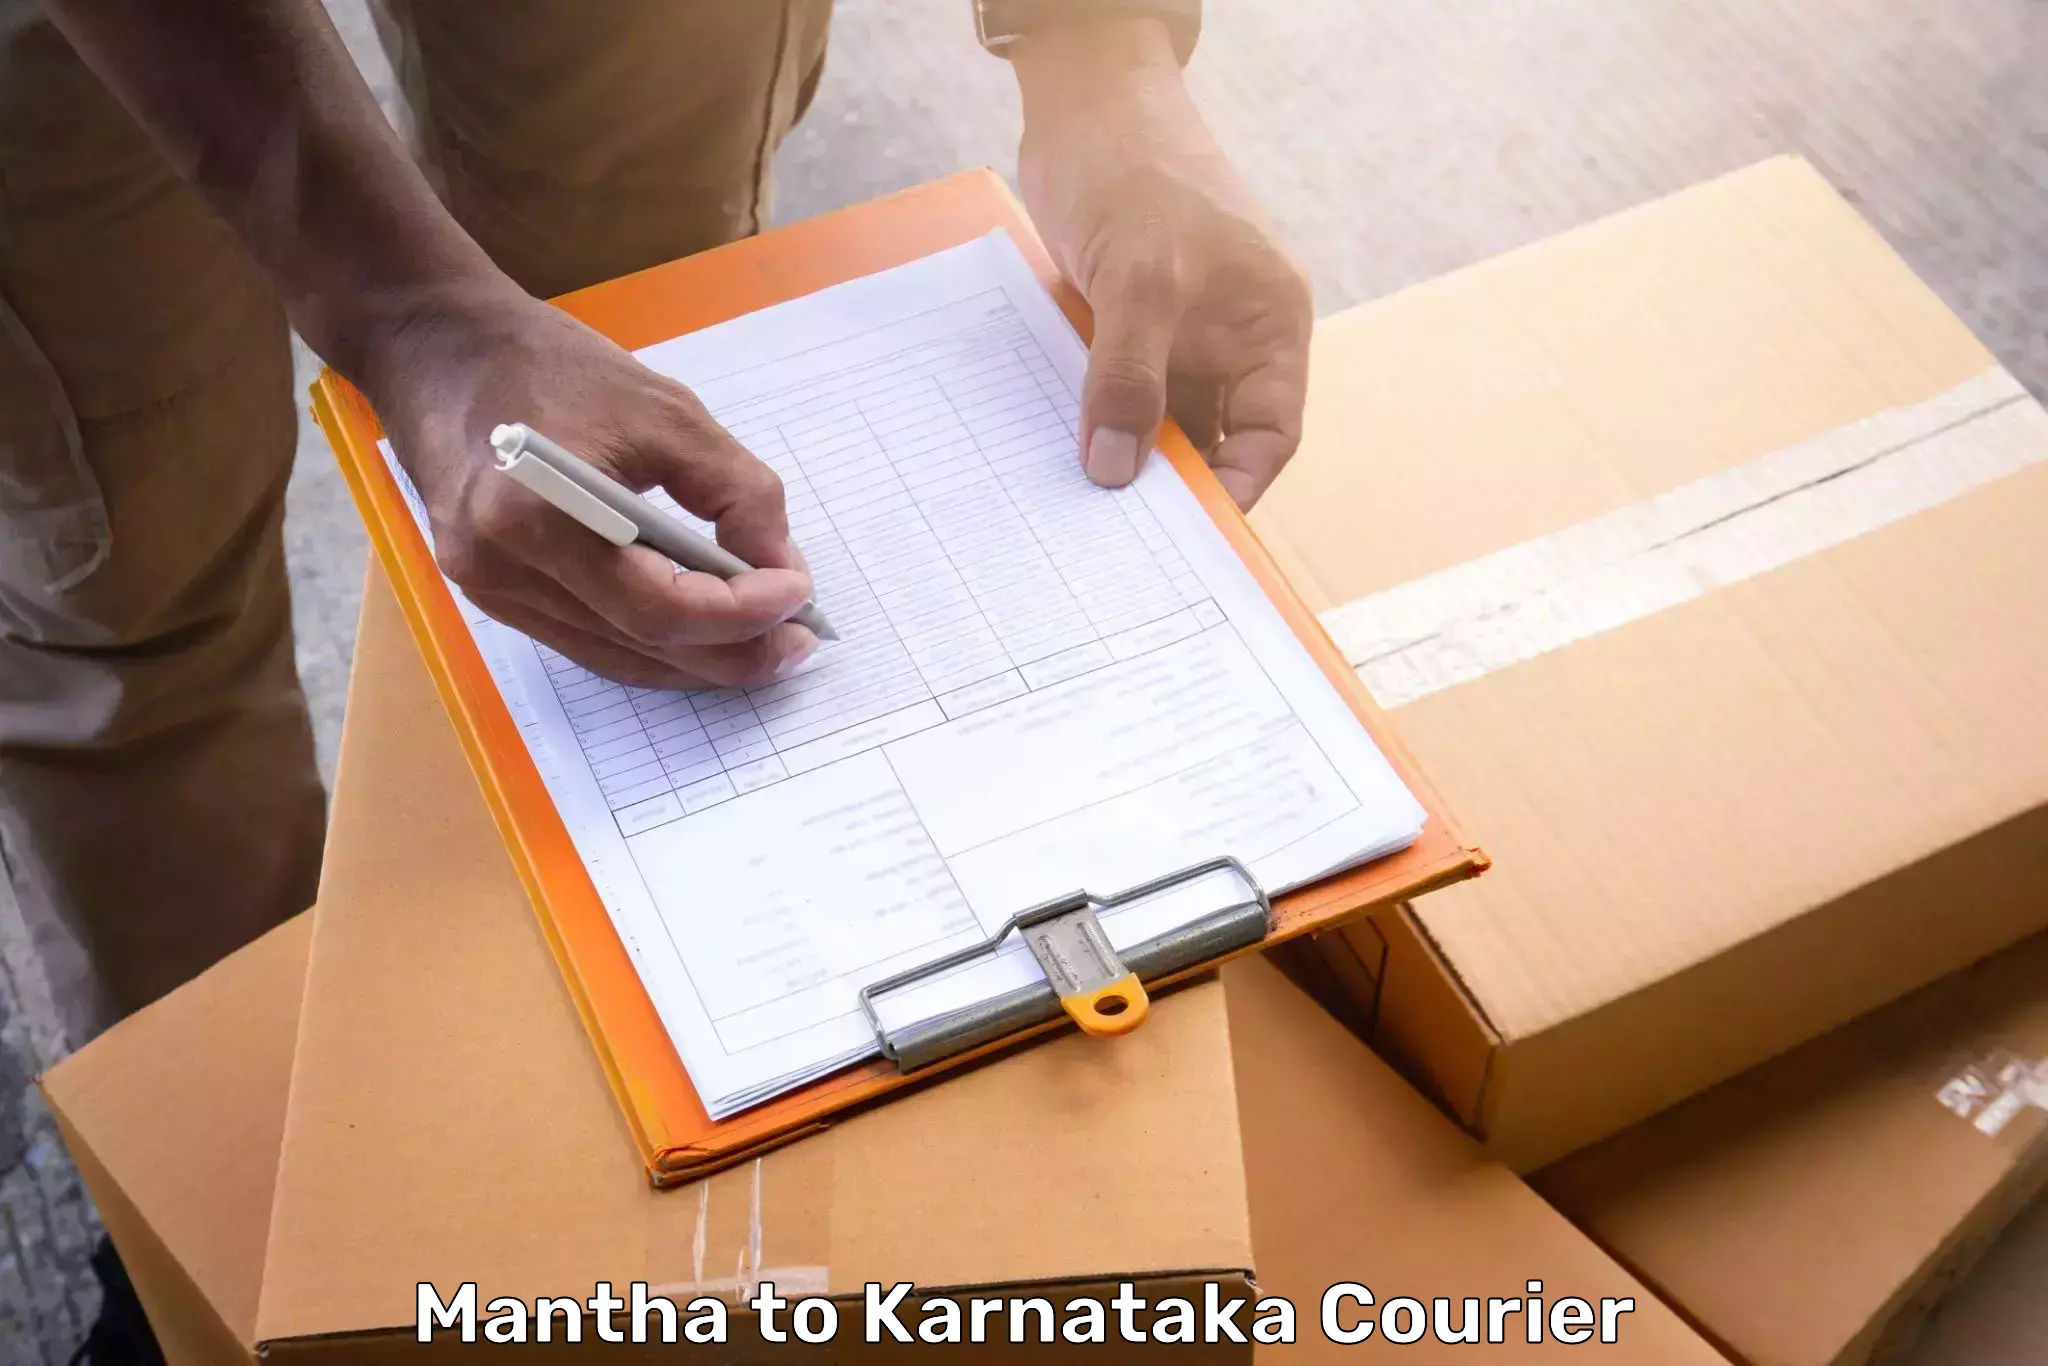 Luggage shipment specialists Mantha to Karnataka